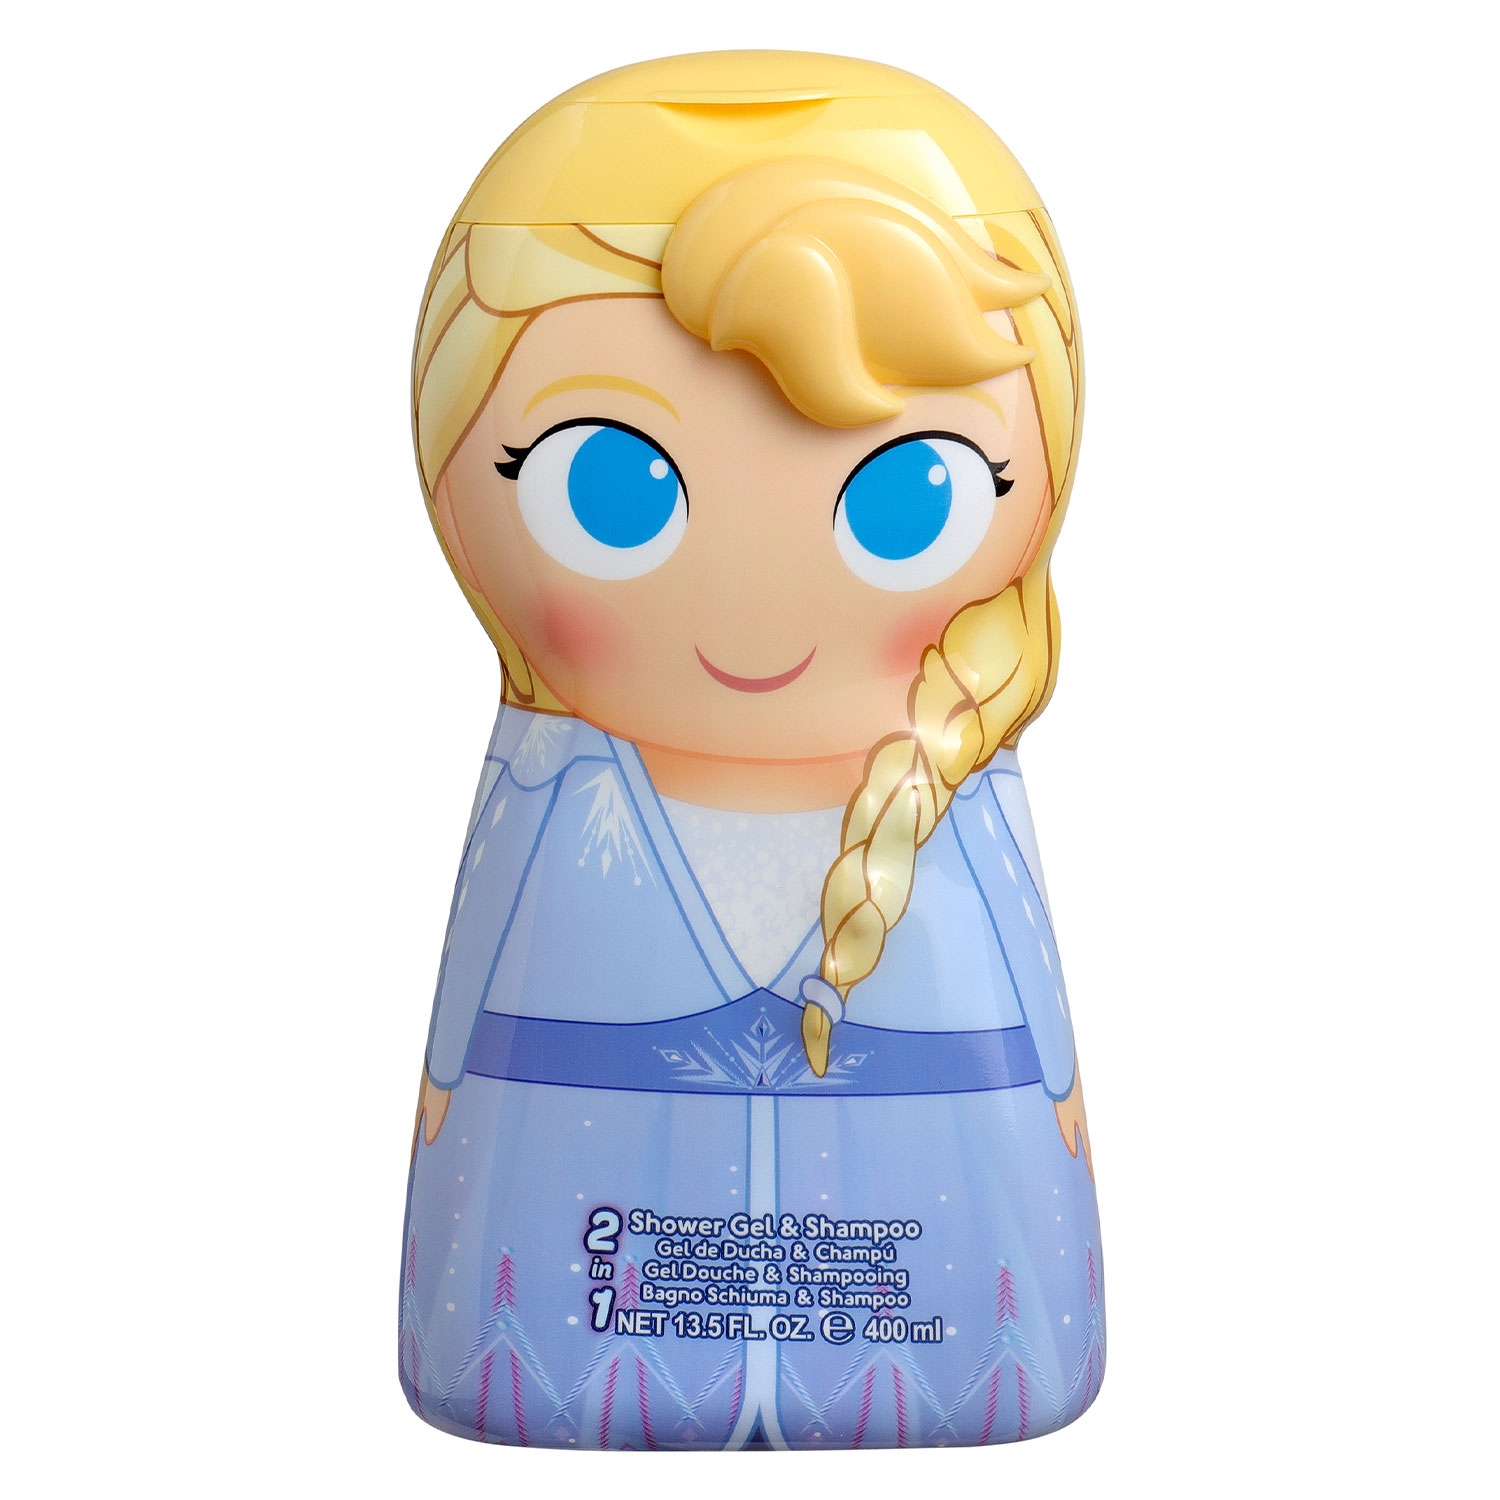 Product image from Kids Shower Gels - Disney Frozen Elsa Shower Gel 2in1